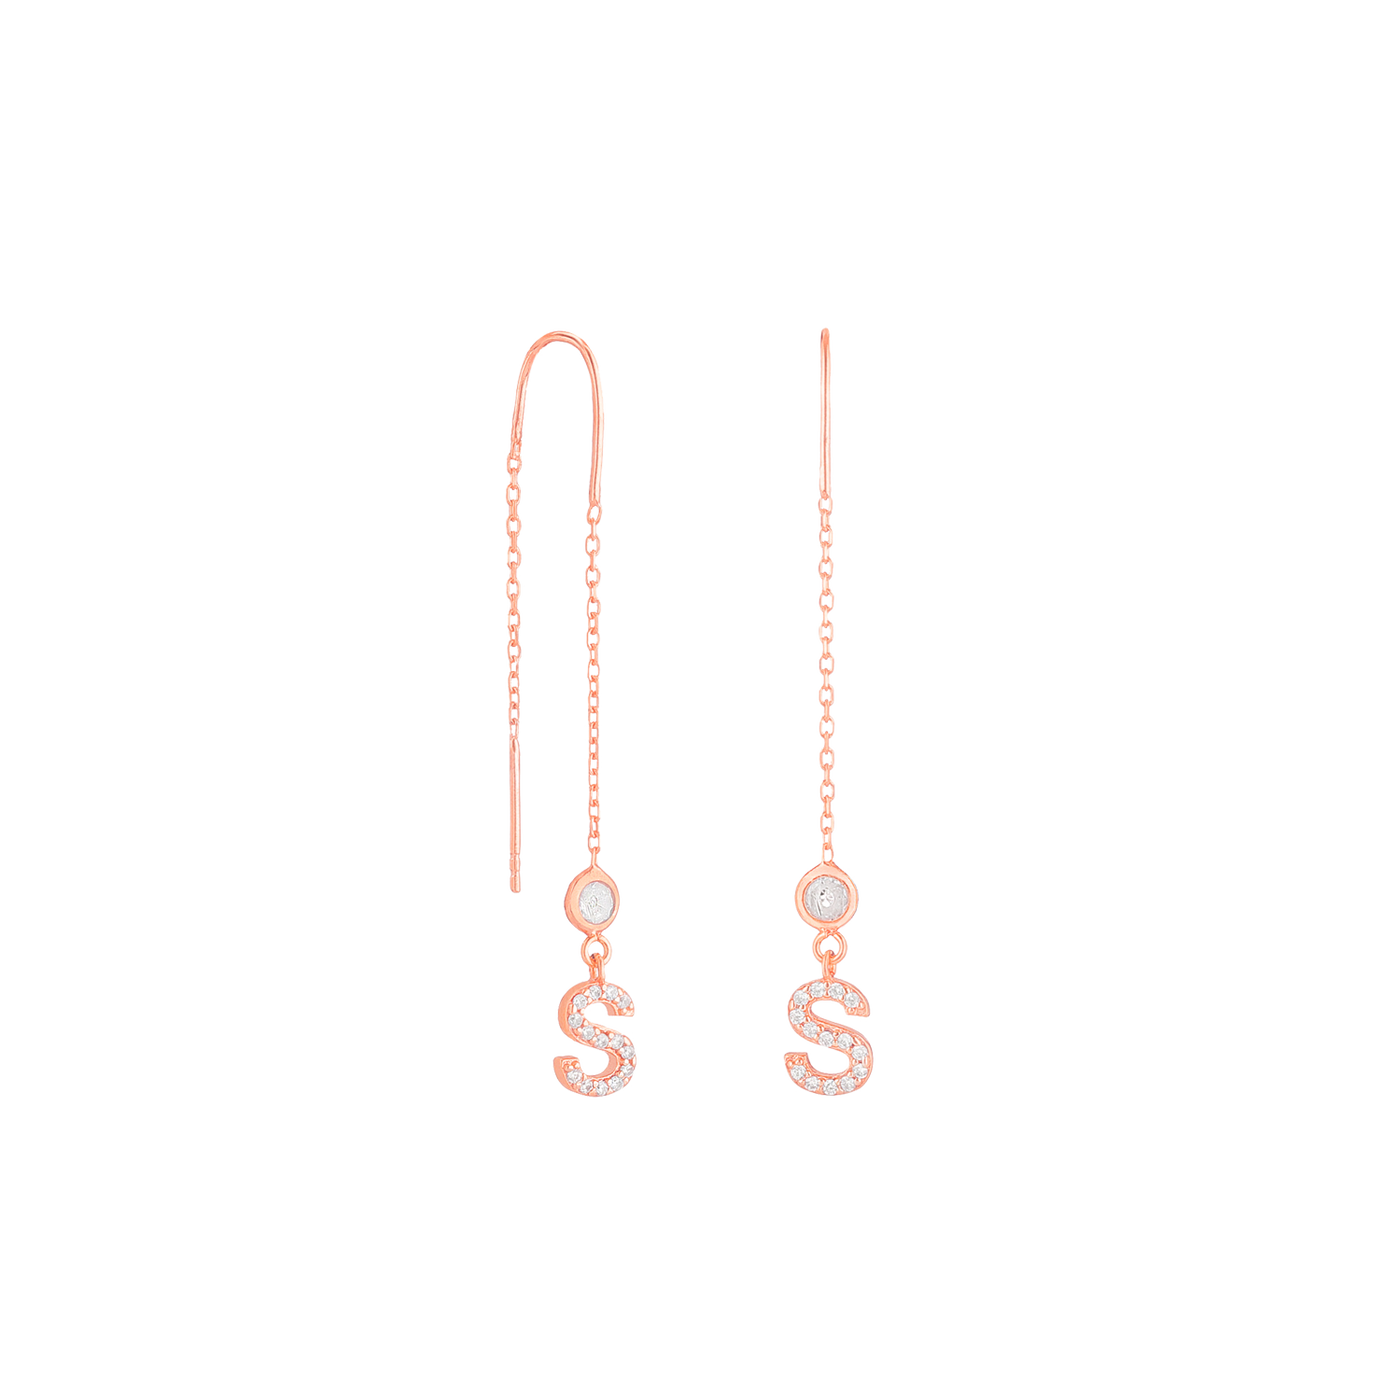 Double strand letter earrings